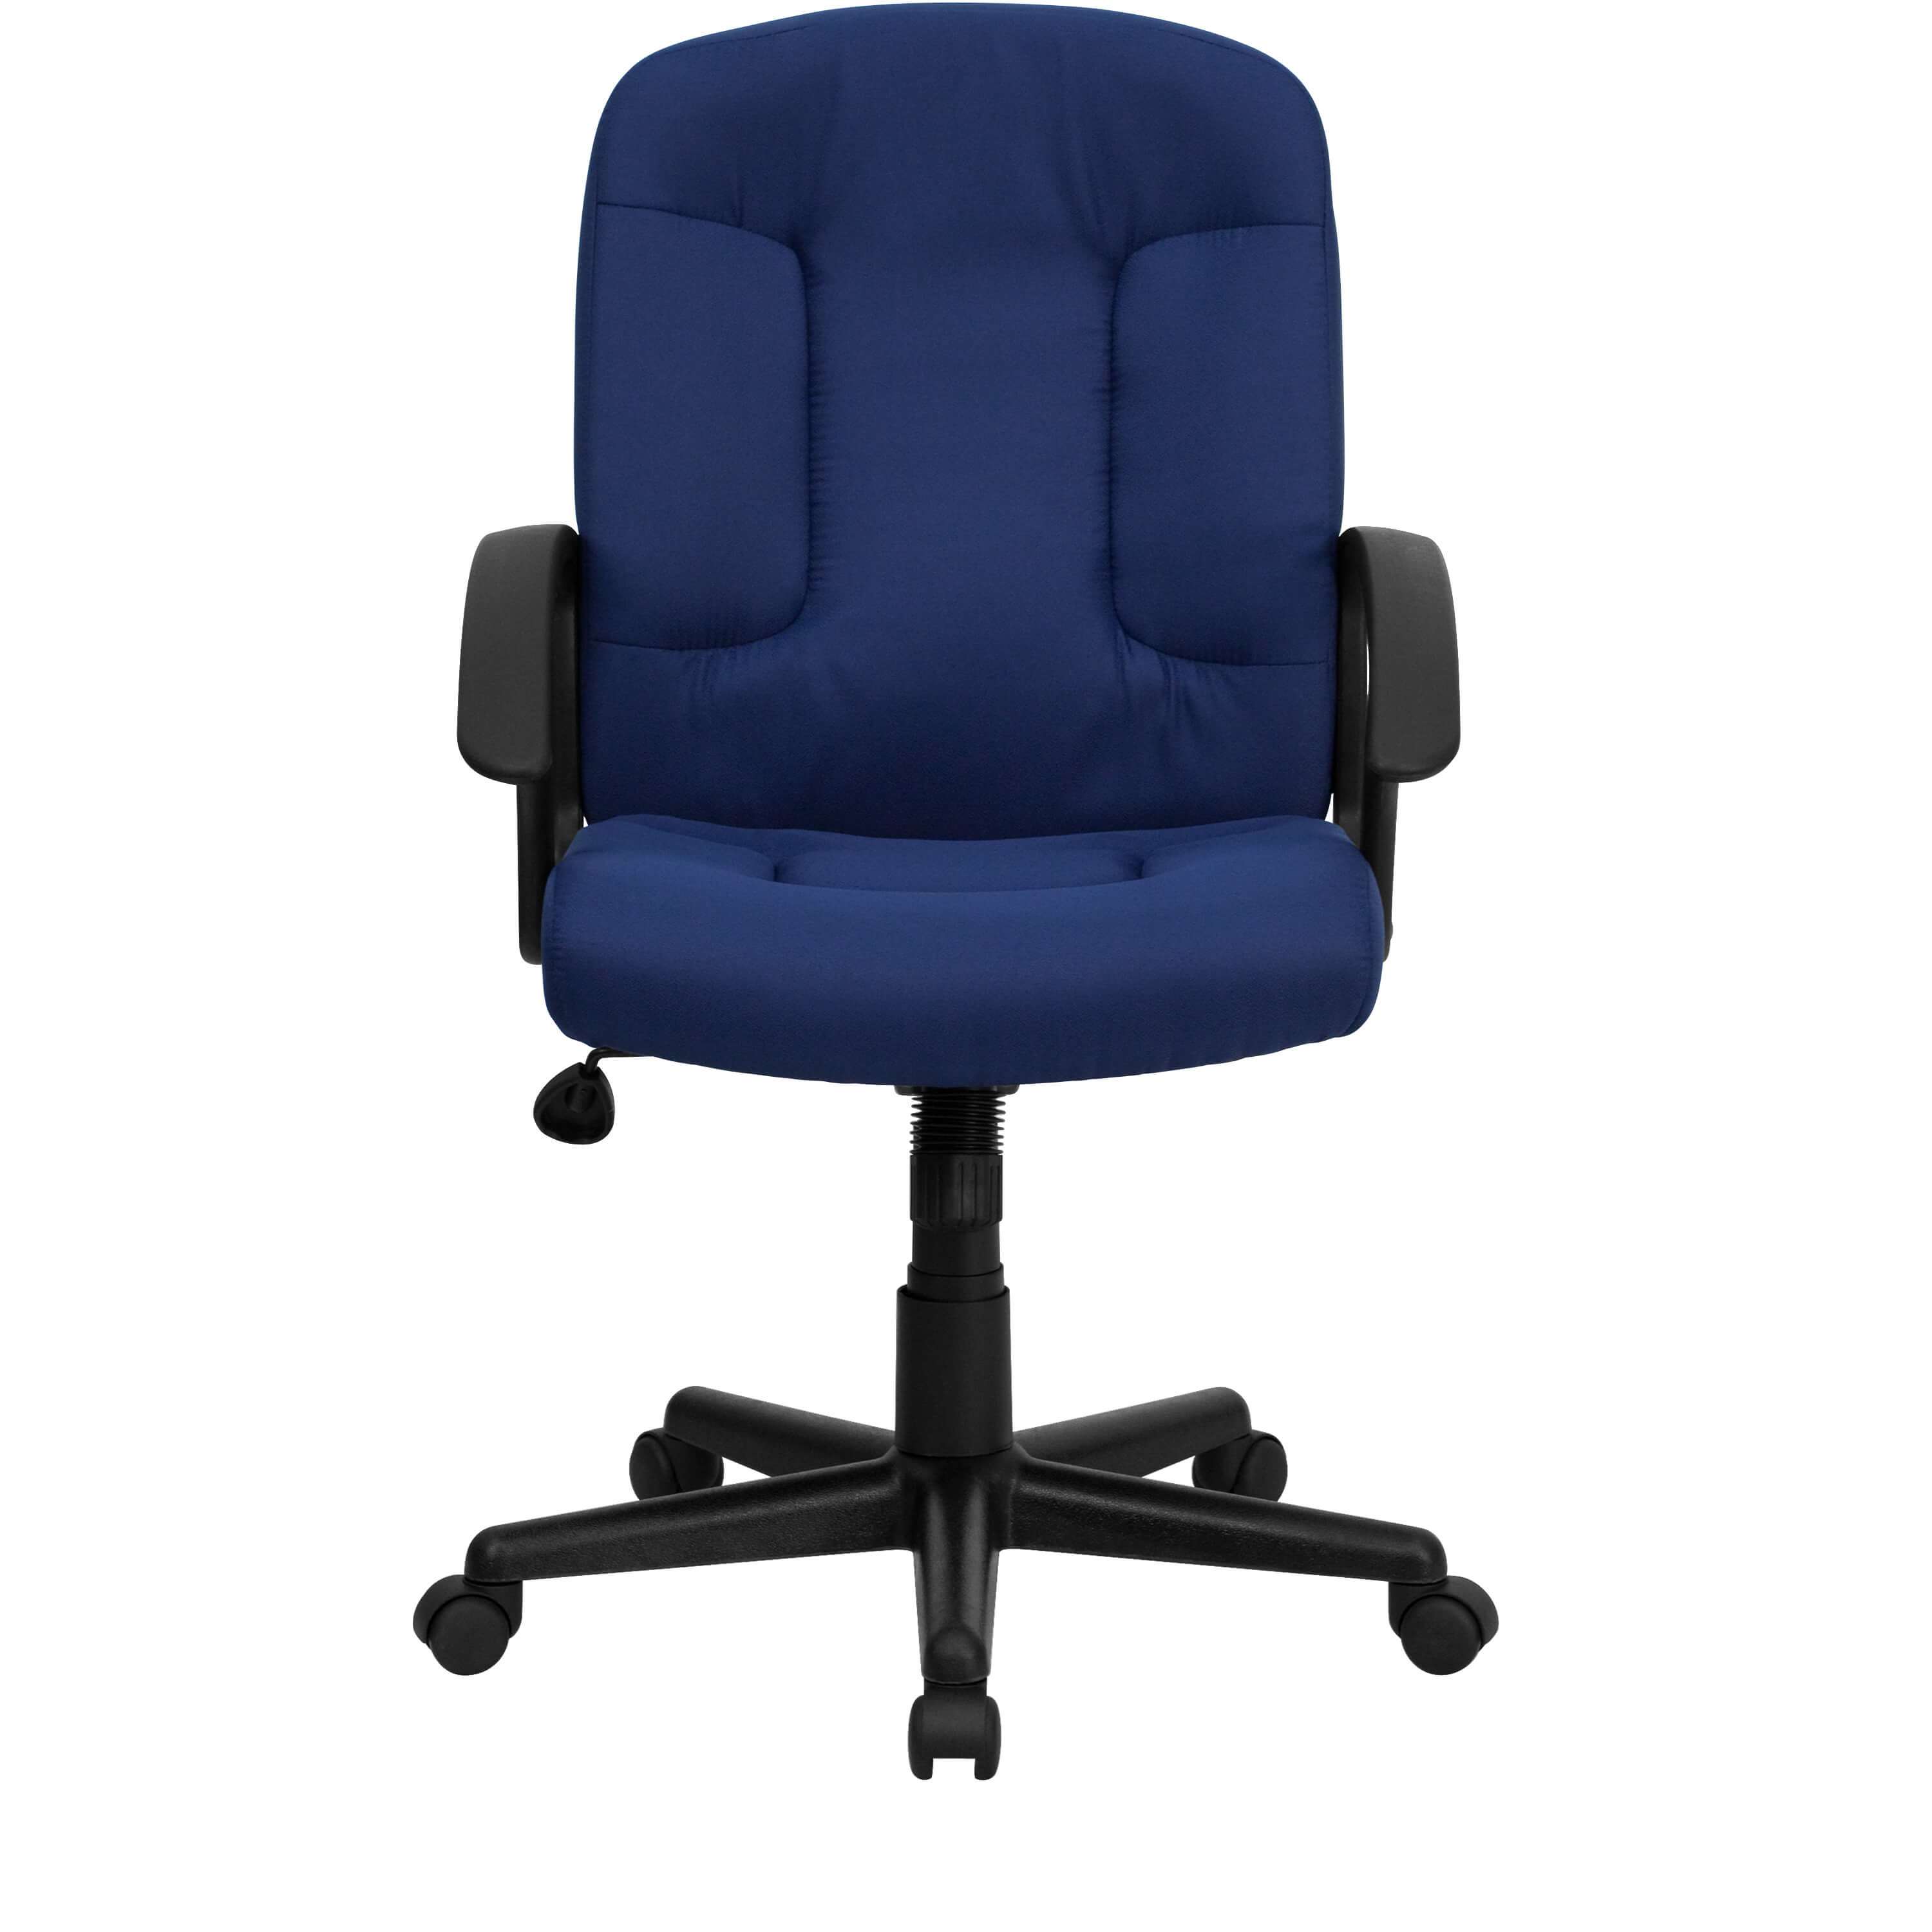 Cool desk chairs CUB GO ST 6 NVY GG FLA